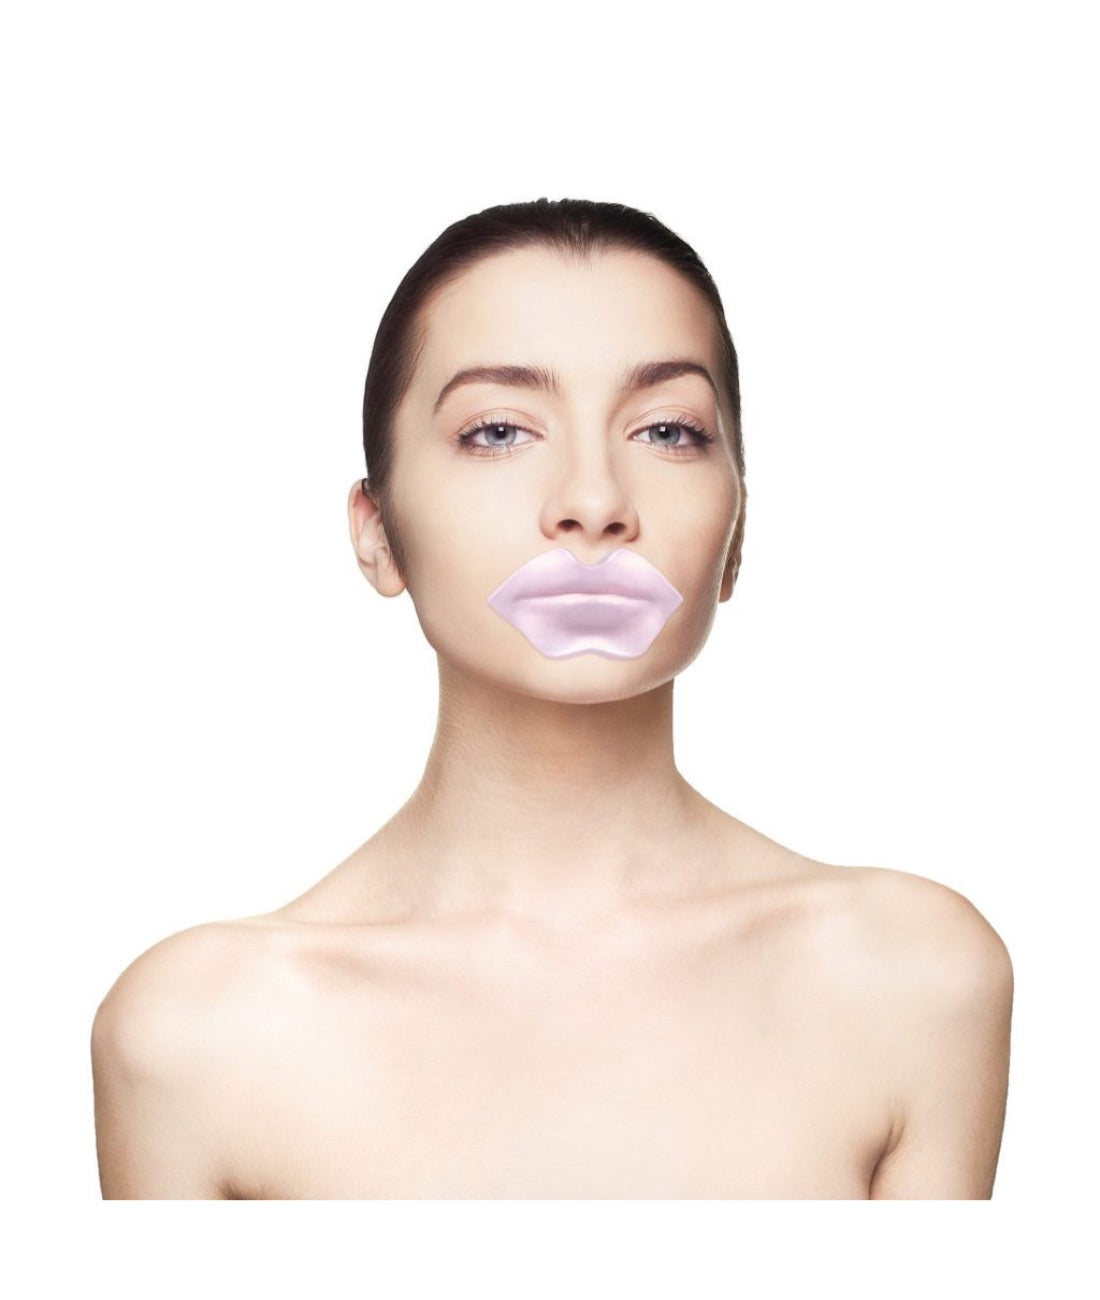 Diamond Radiance Collagen Lip Mask